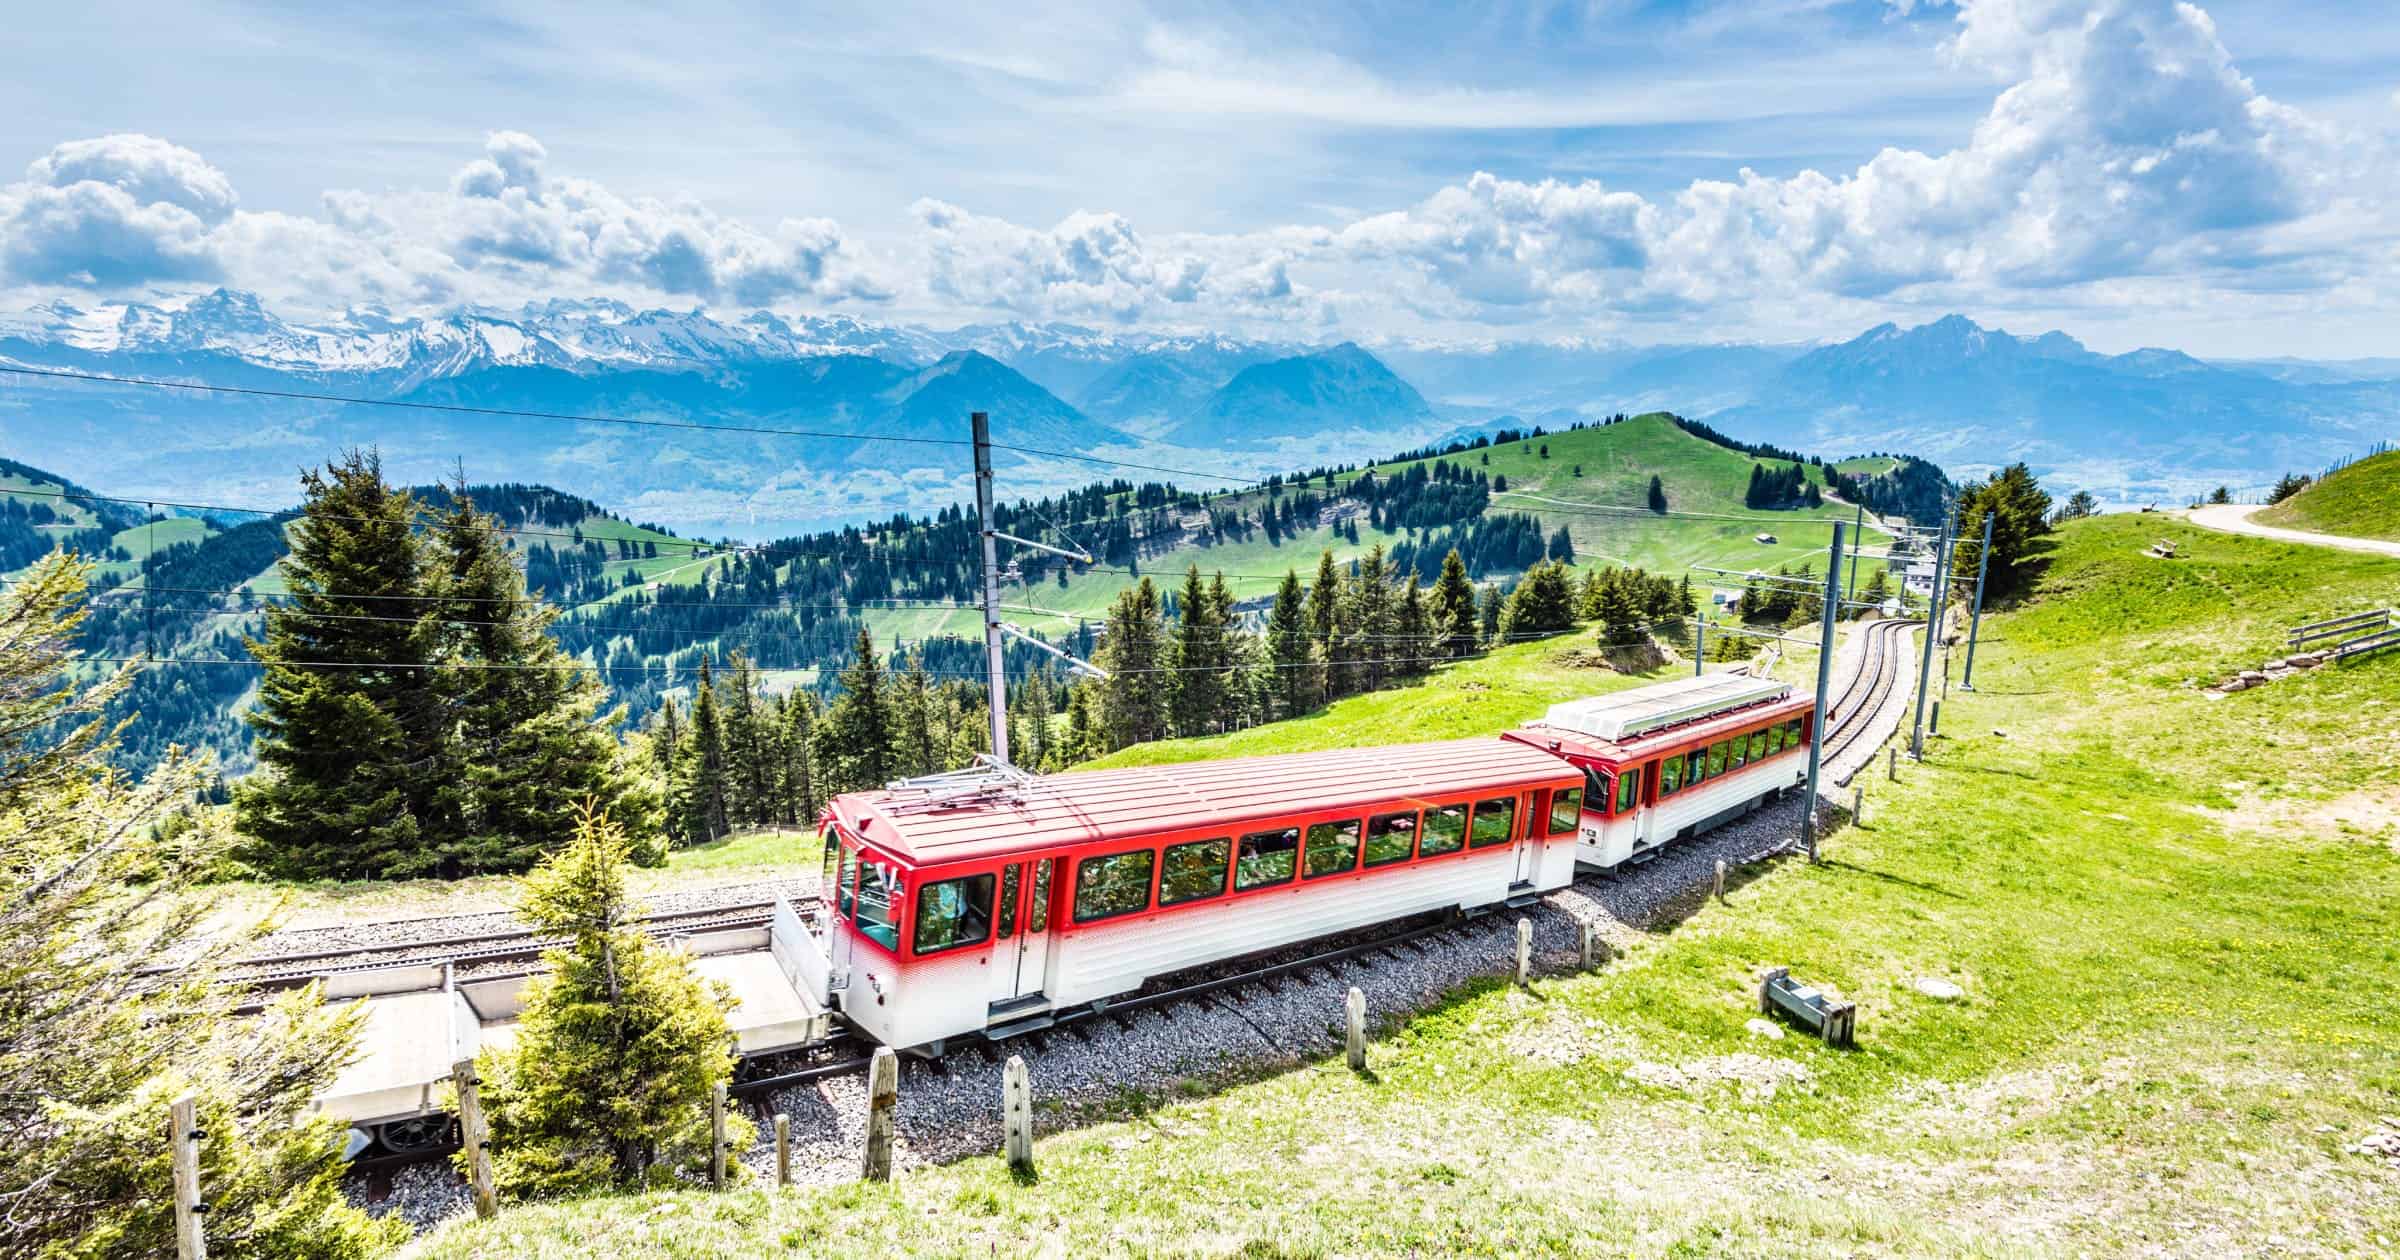 Mount Rigi Panorama Trail, Switzerland 